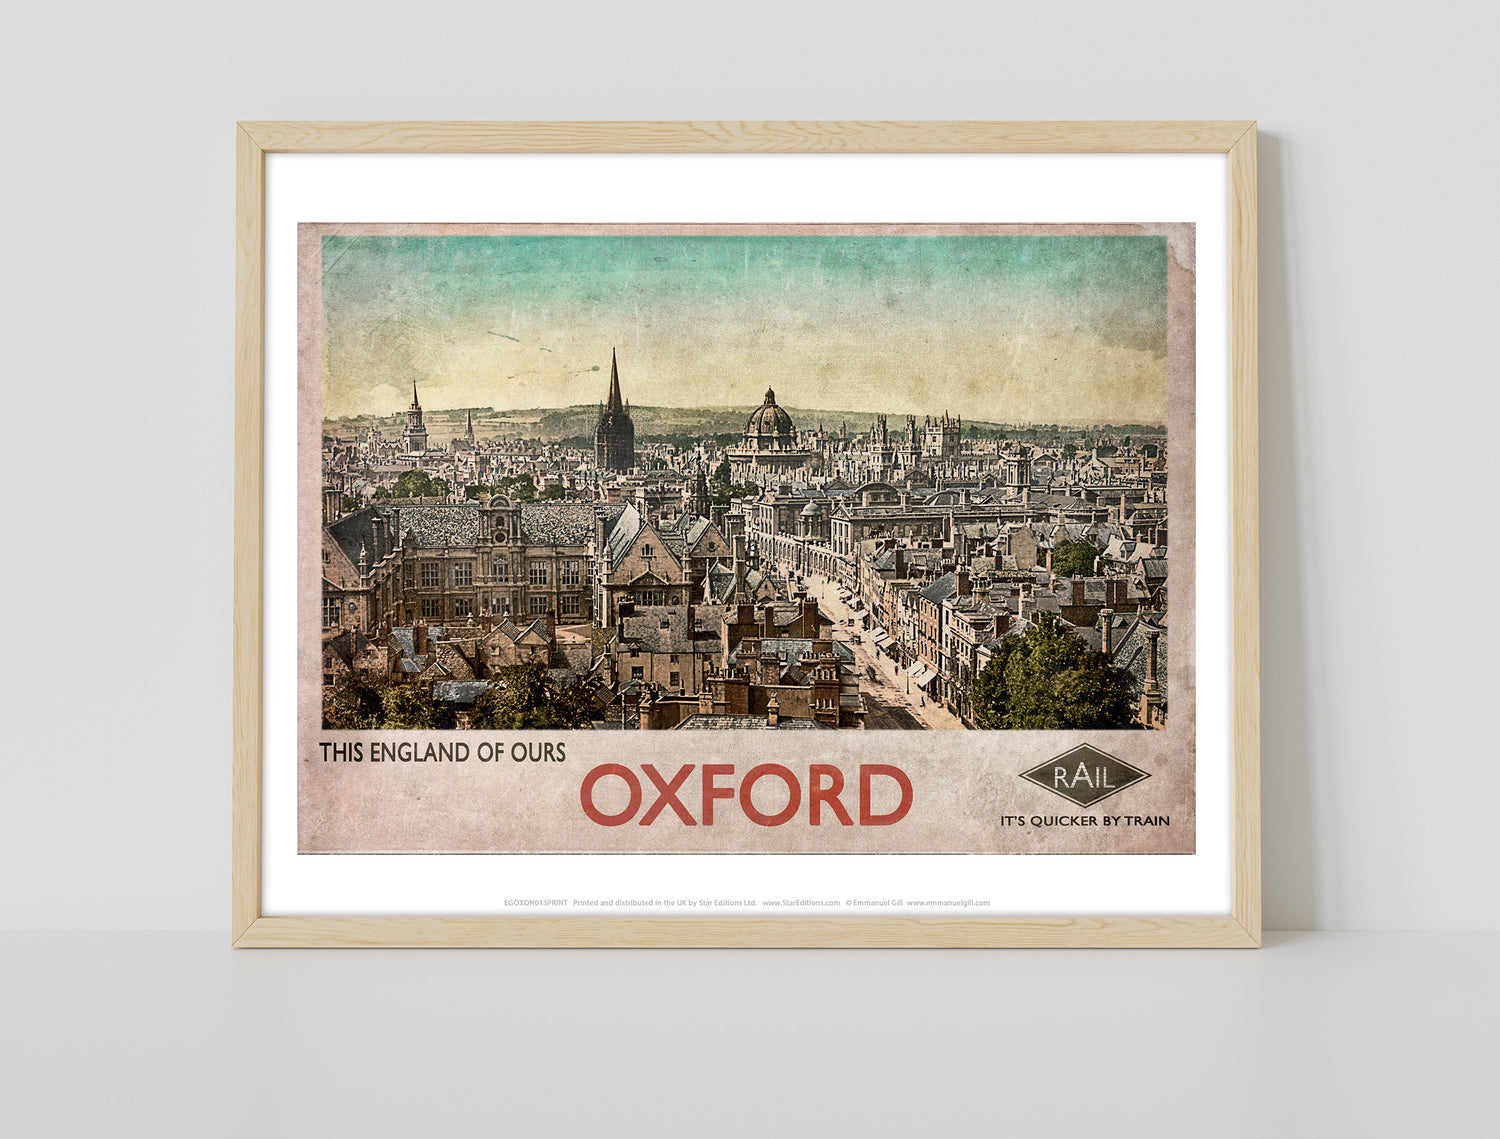 Oxford - Art Print